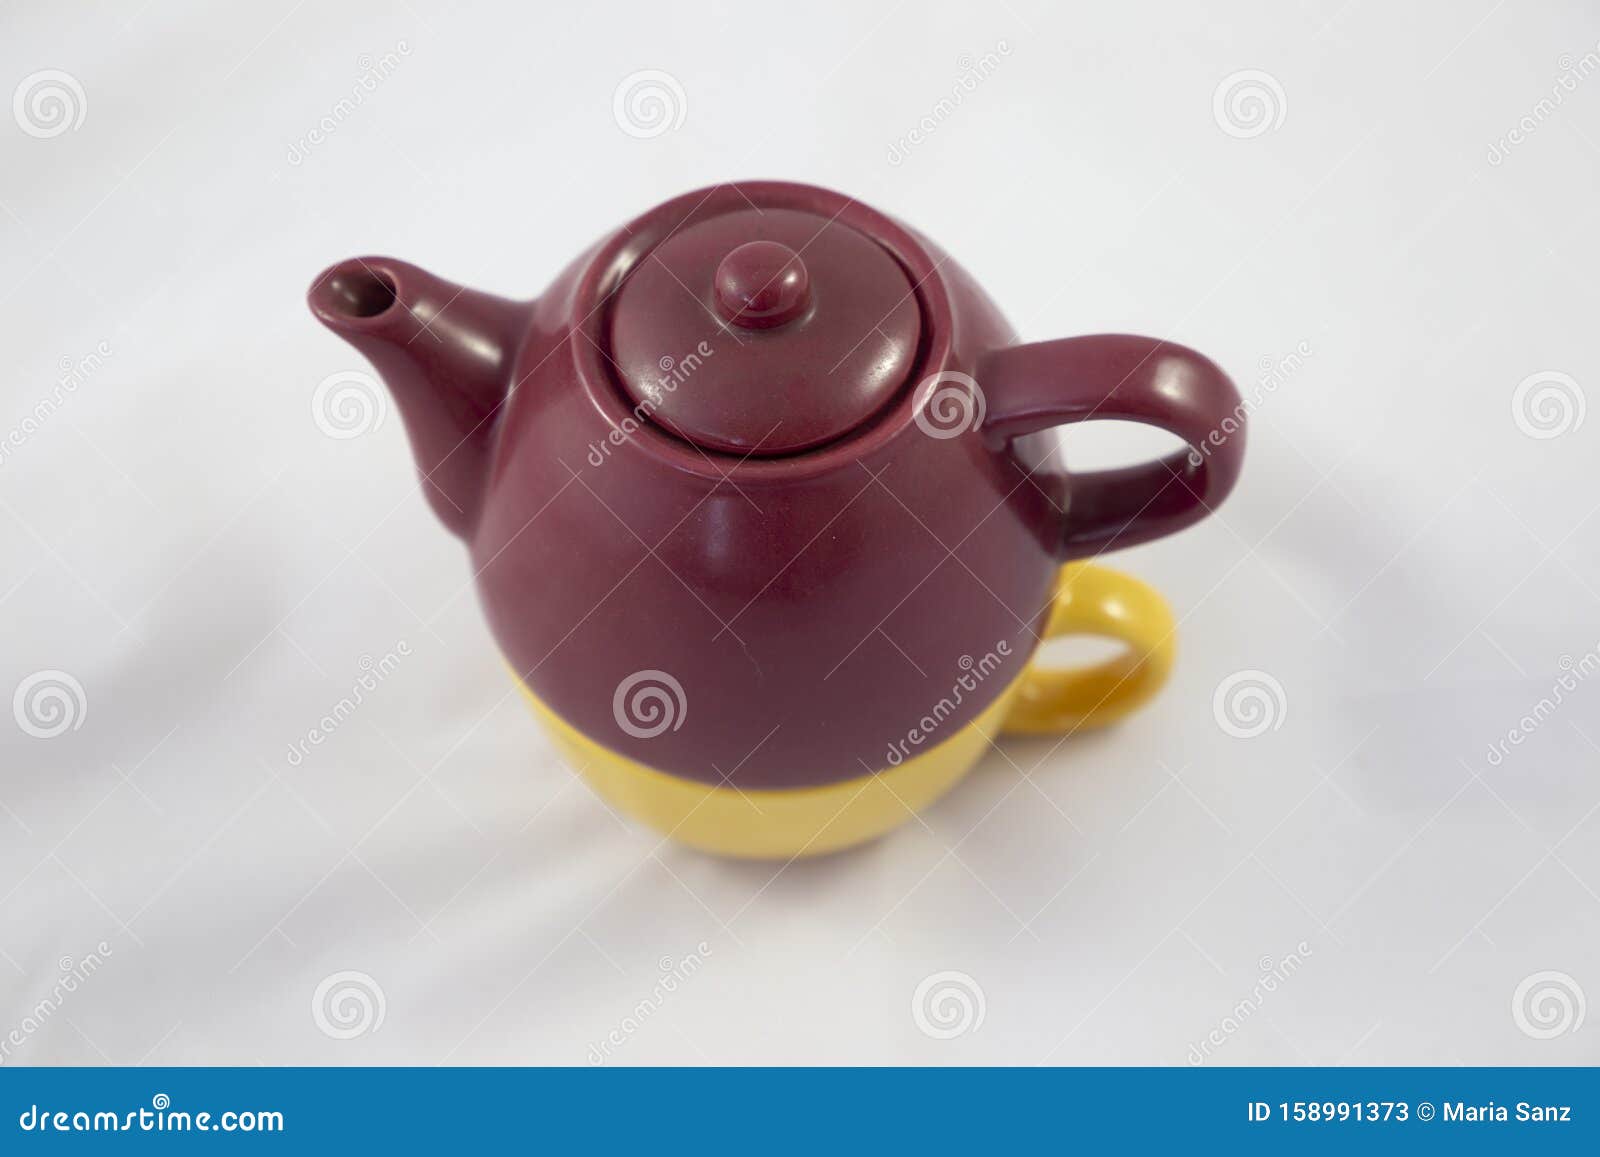 bicolor ceramic teapot on white background.